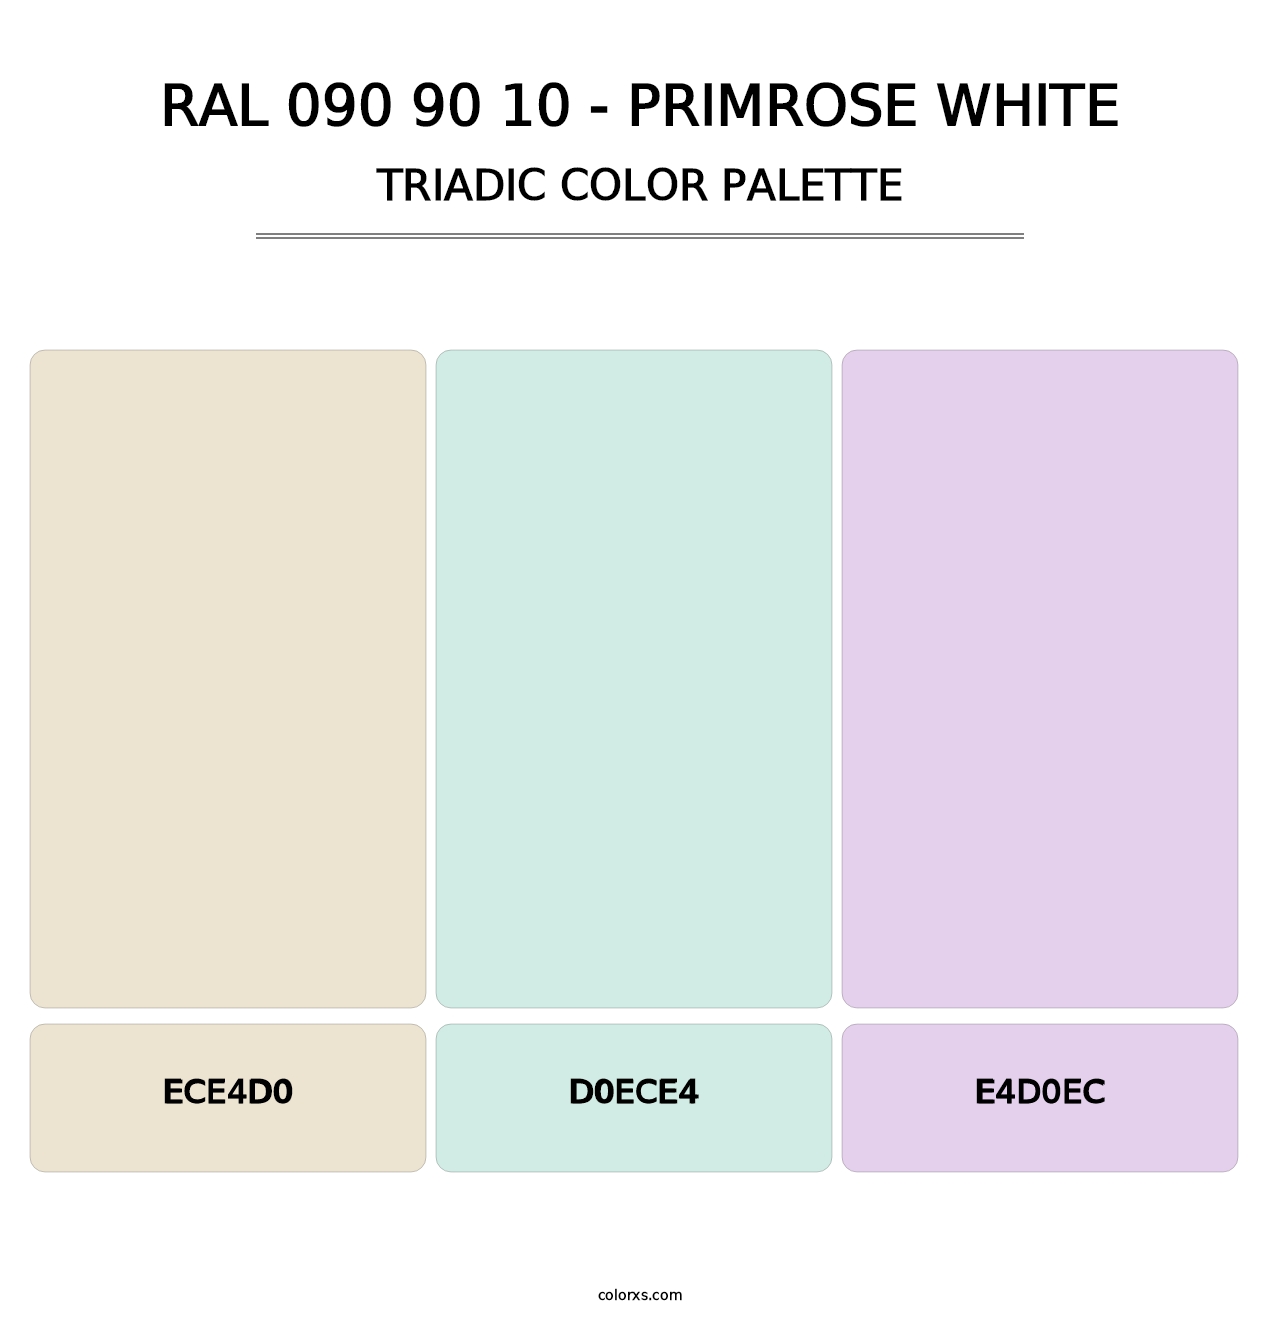 RAL 090 90 10 - Primrose White - Triadic Color Palette